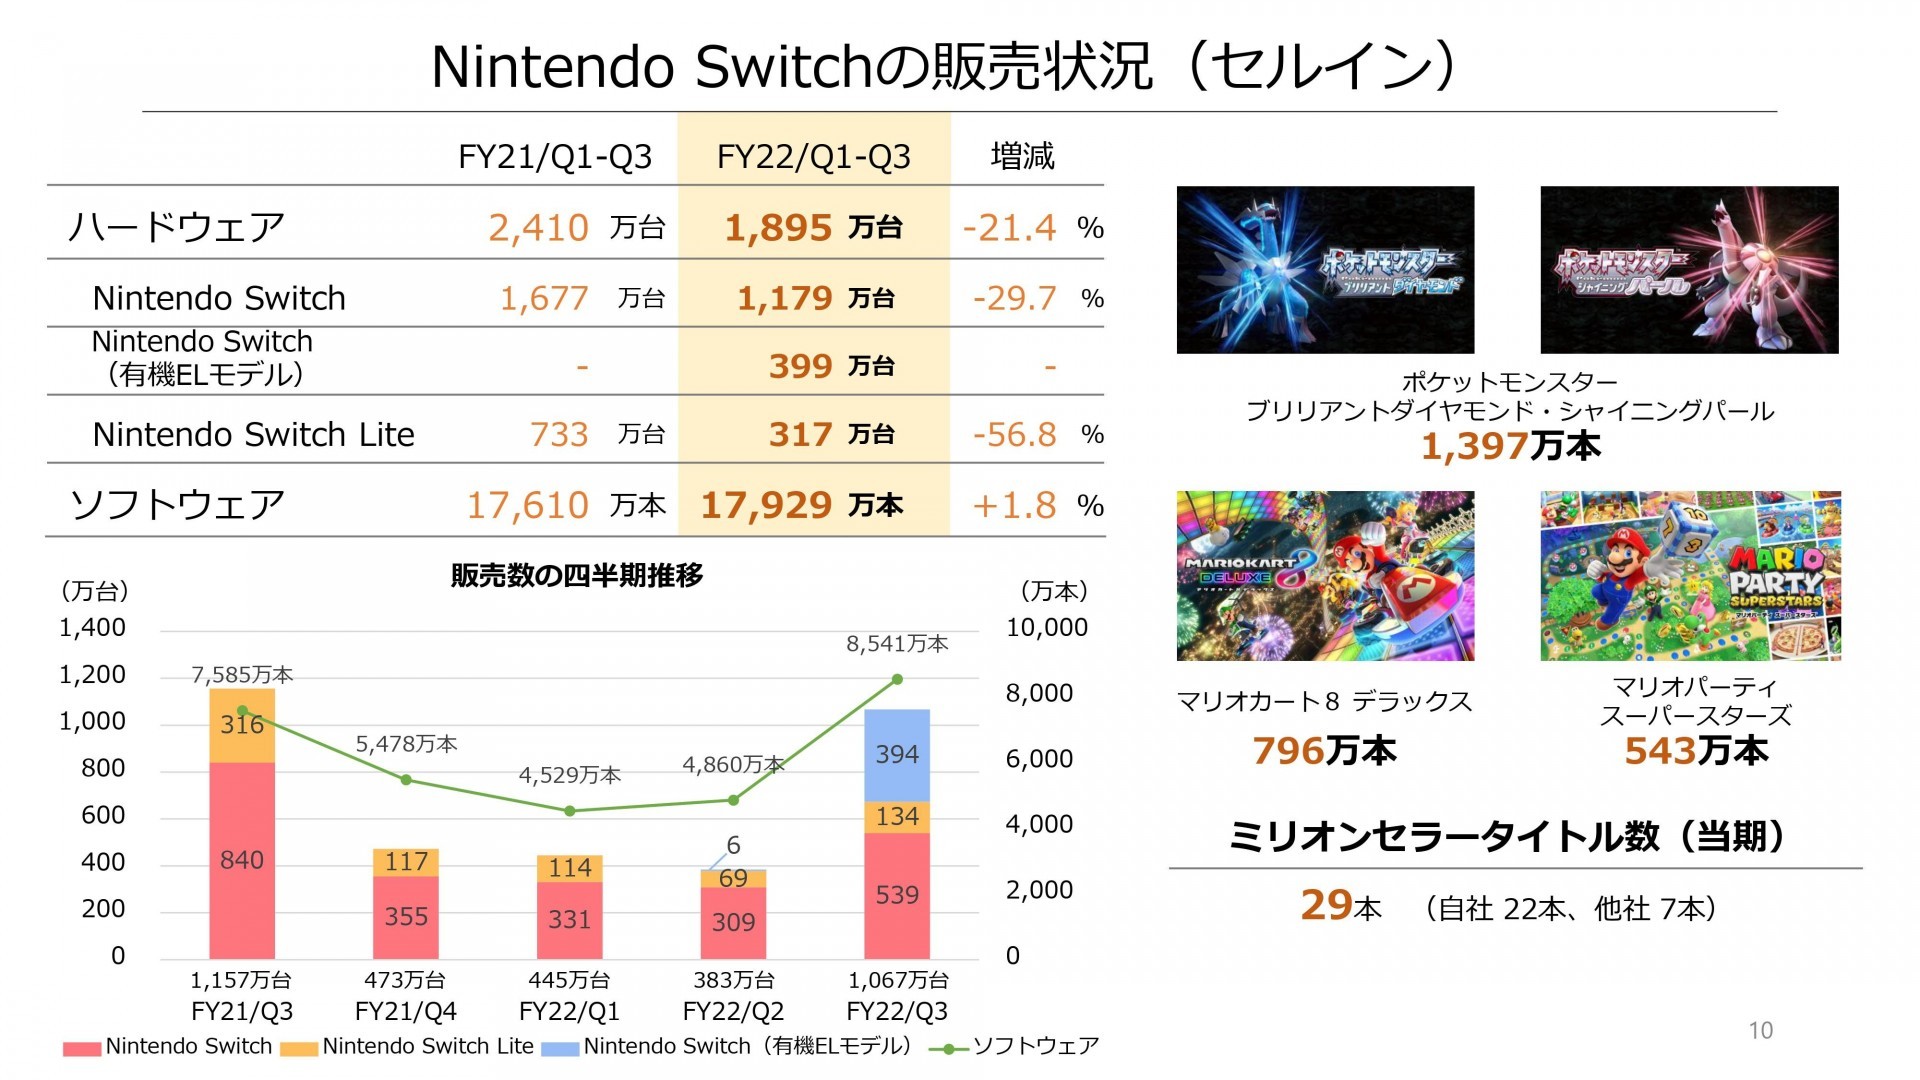 Nintendo Switch 主机累计销售突破 1 亿台大关 成为任天堂旗下最畅销家用主机